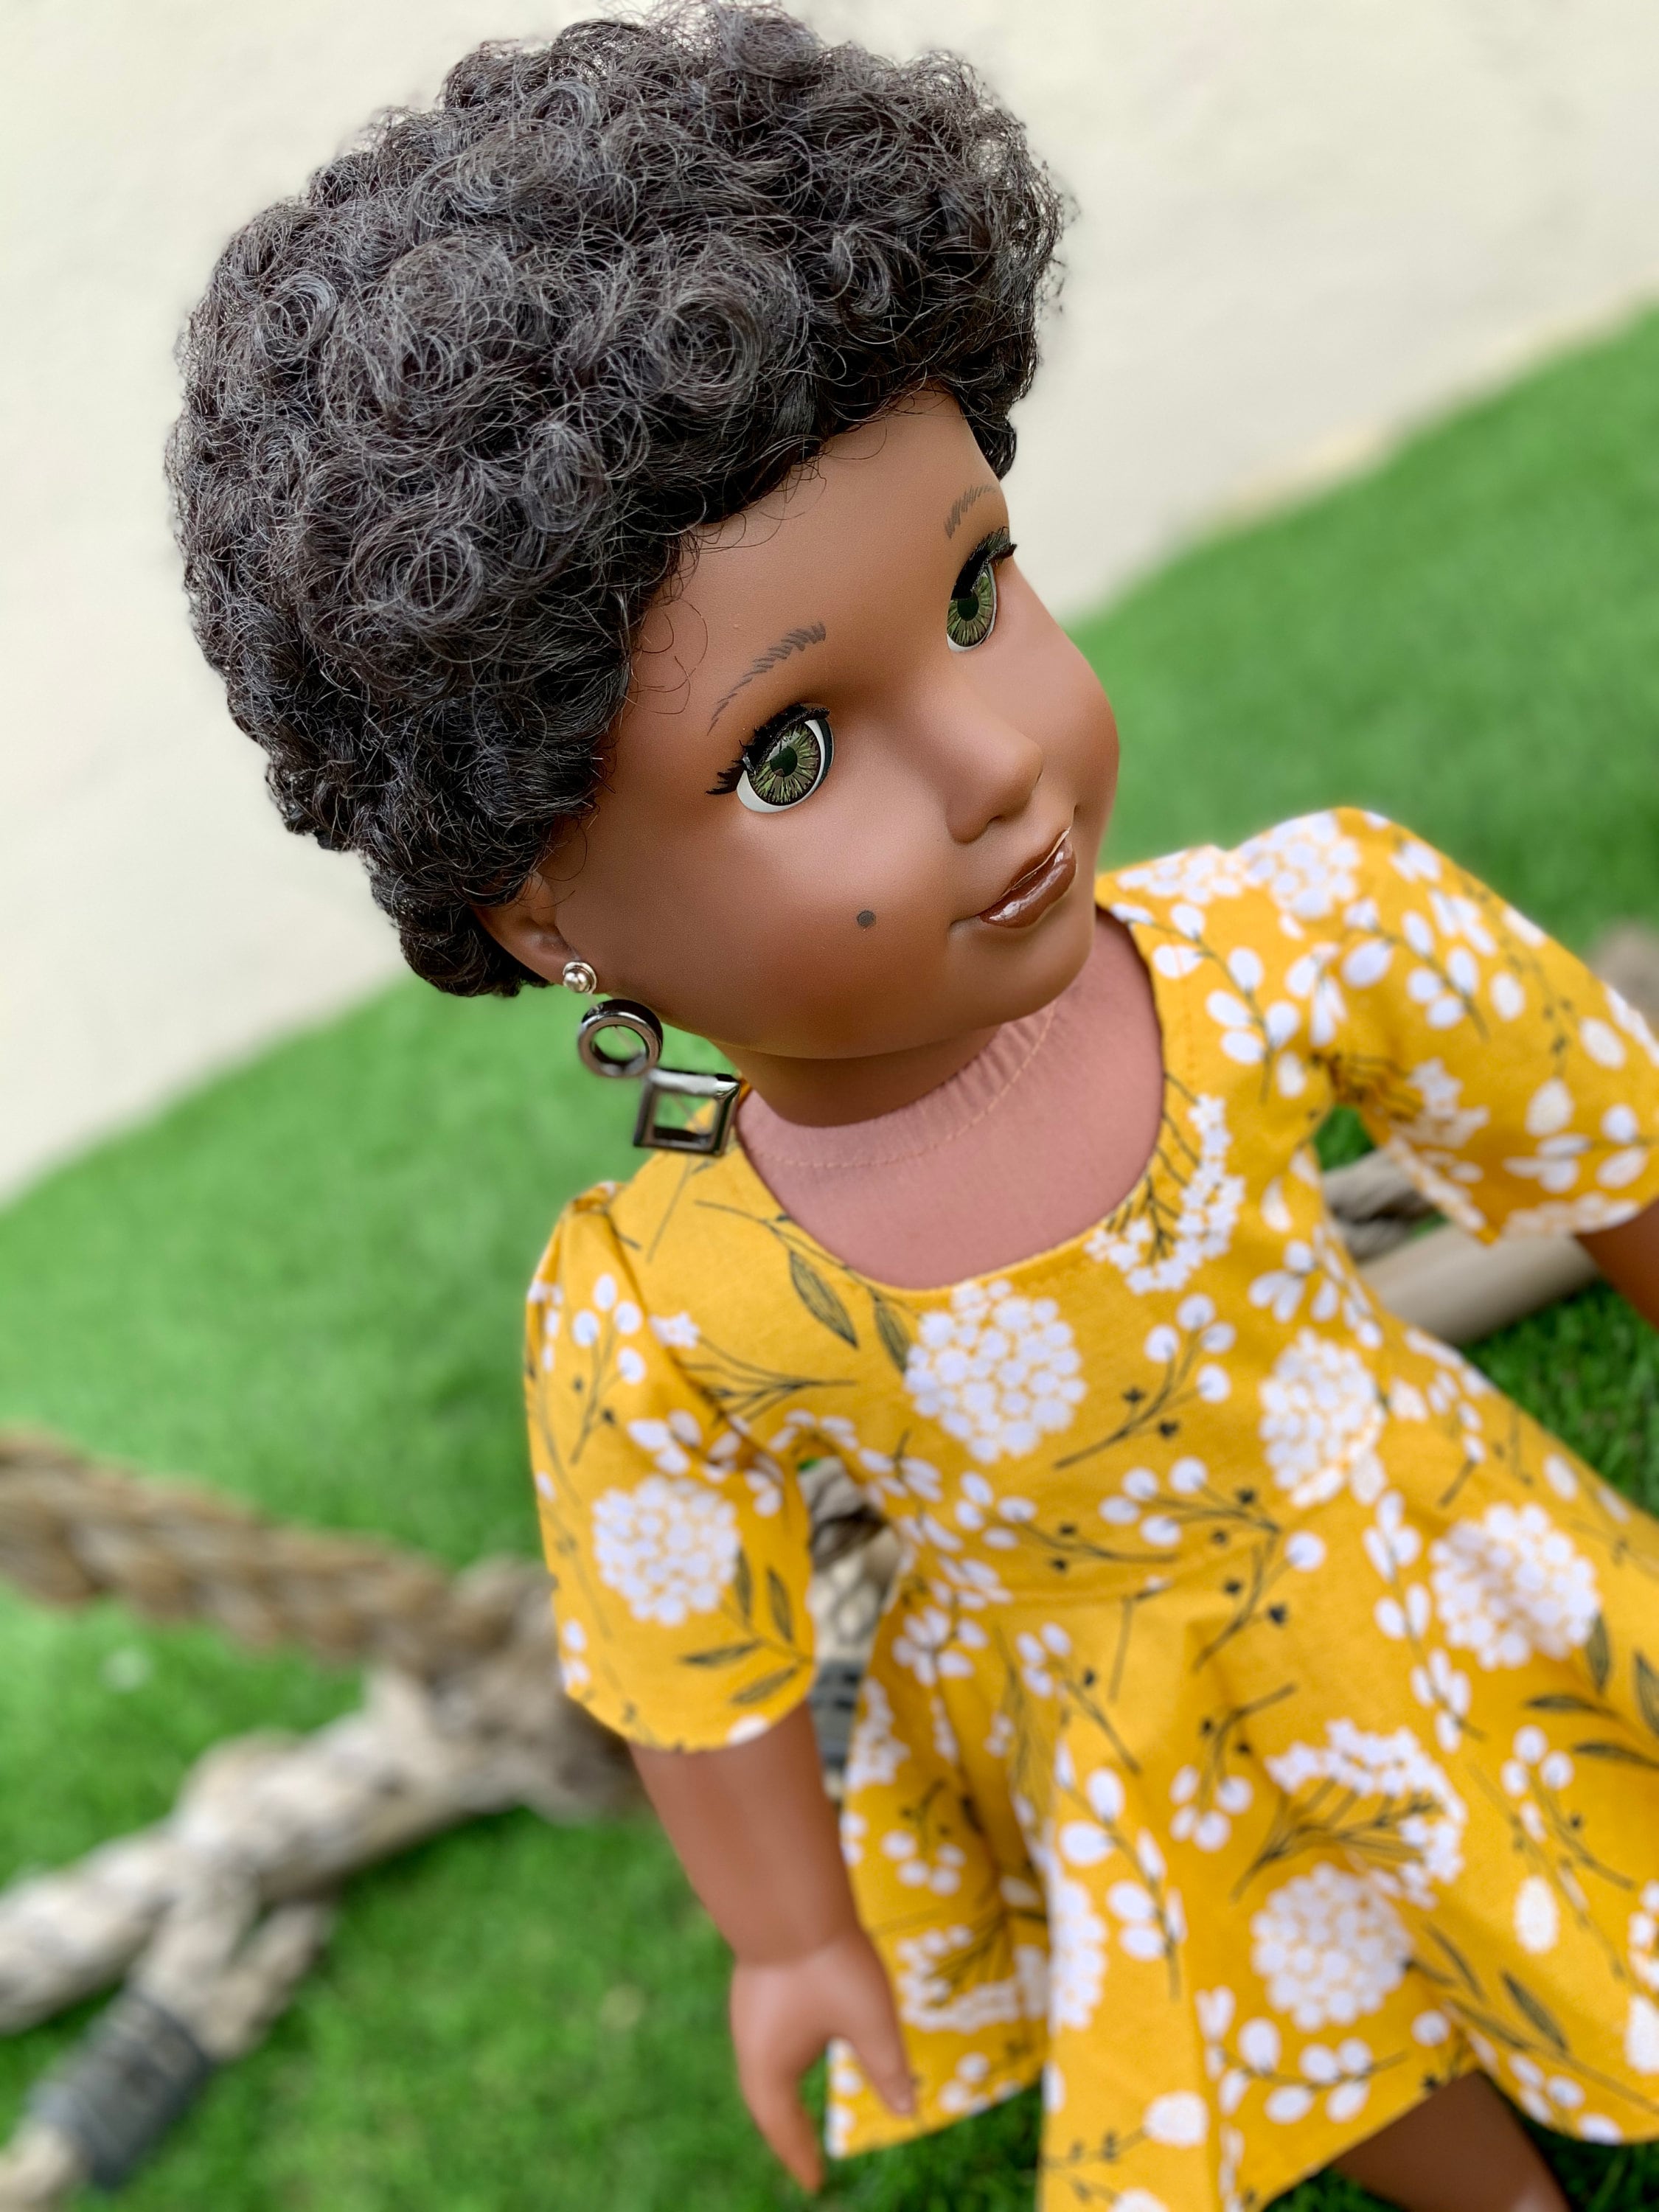 Custom doll wig for 18" American Girl Dolls Tangle Resistant - fits 10-11" head size of 18" dolls OG Blythe BJD Gotz AA Fro !!